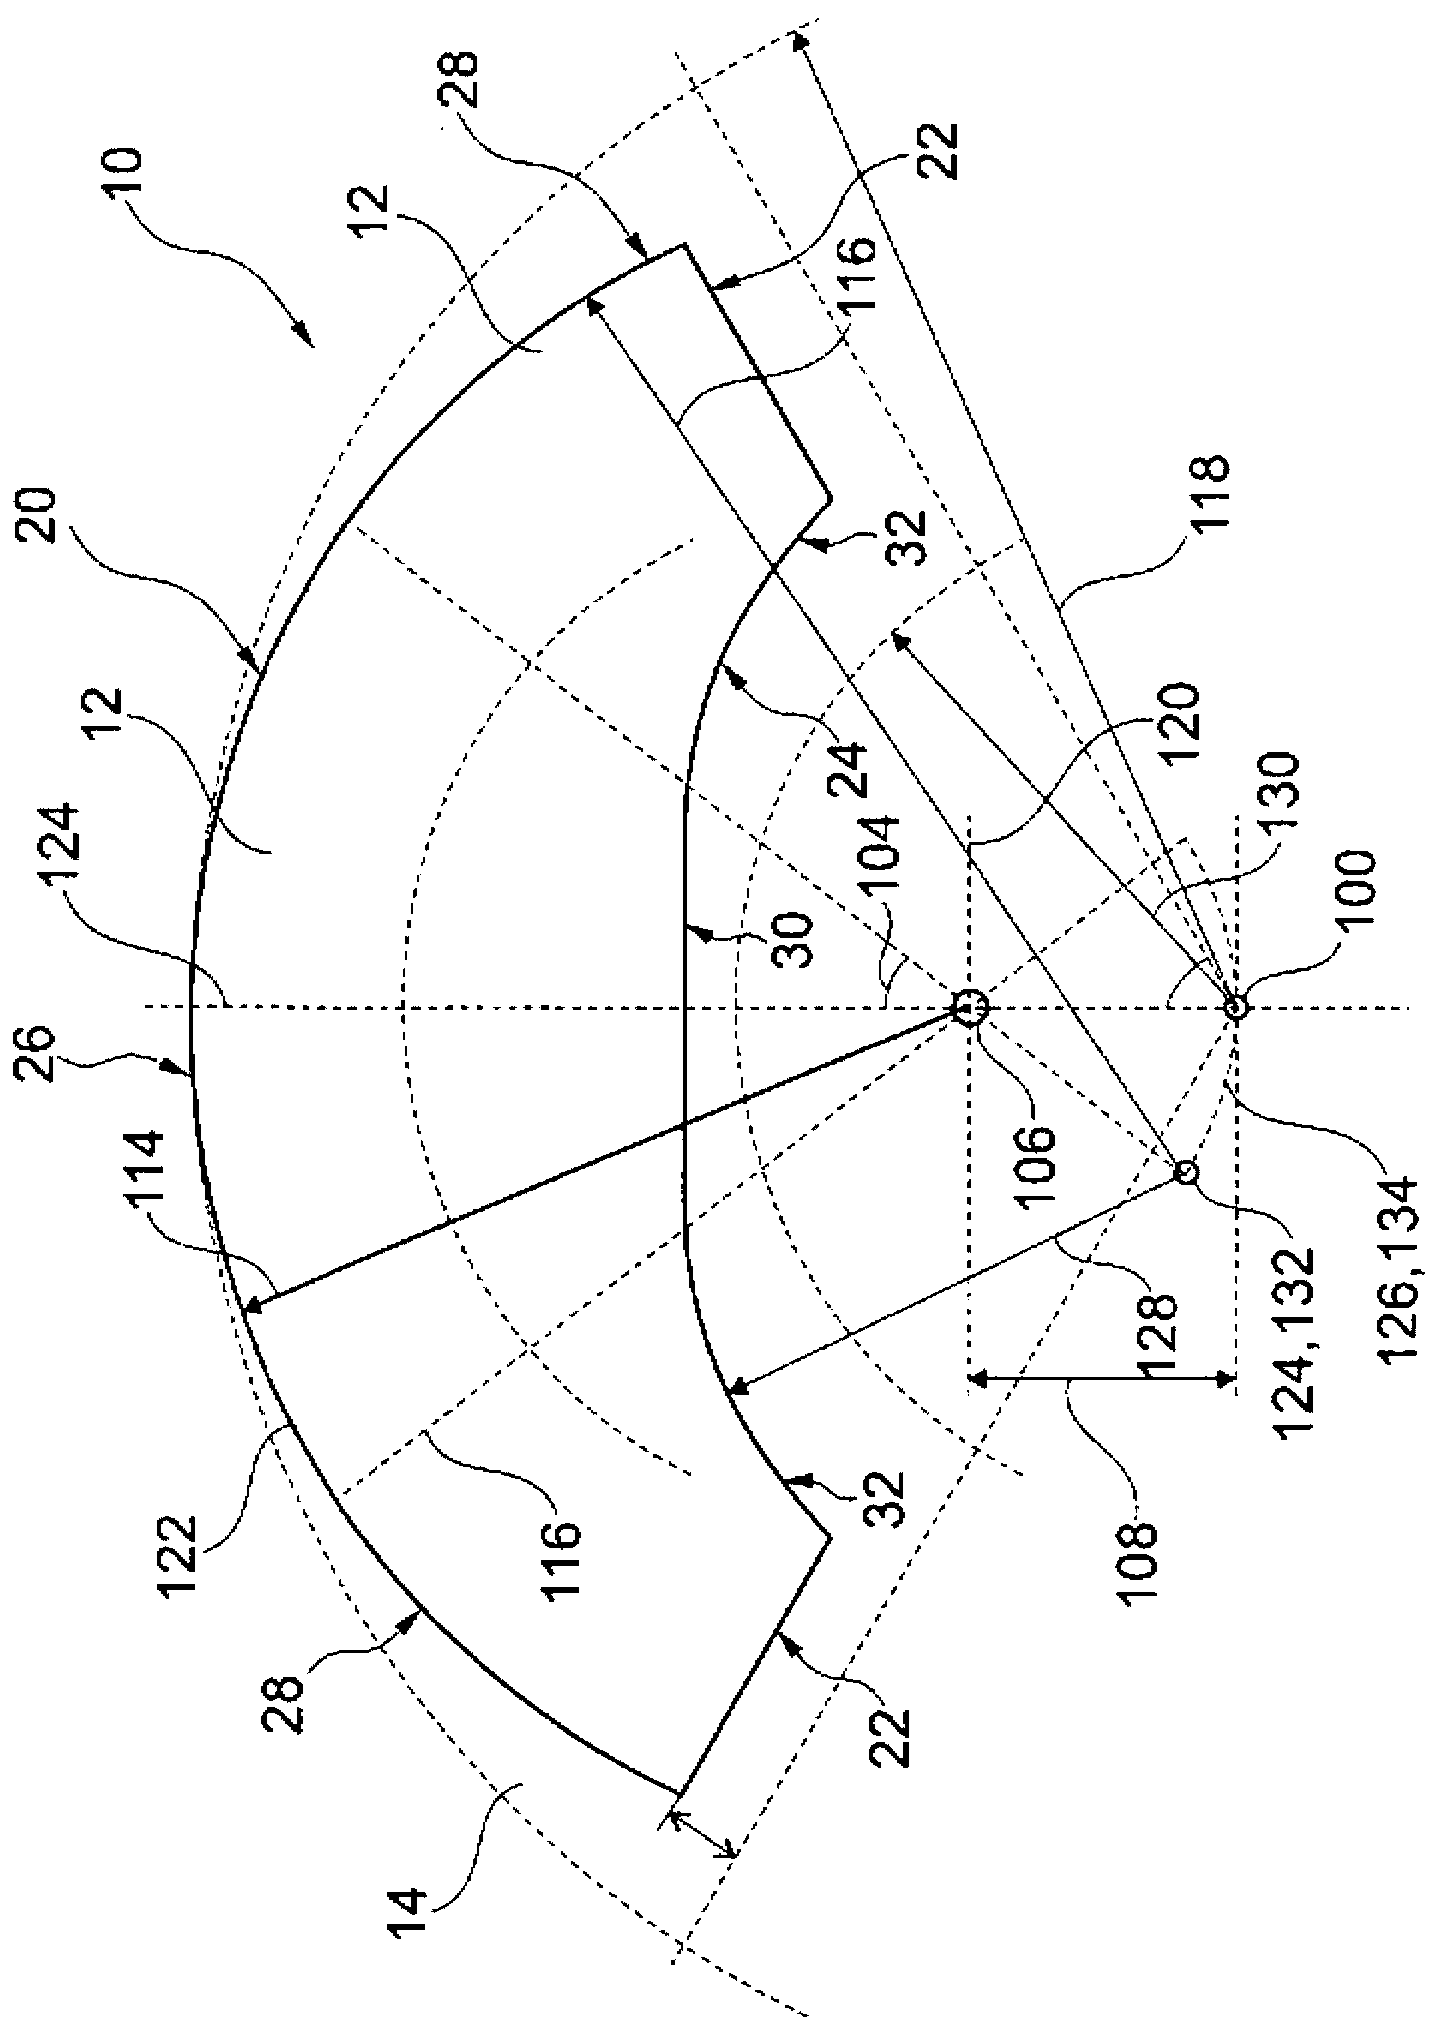 Centrifugal force pendulum device